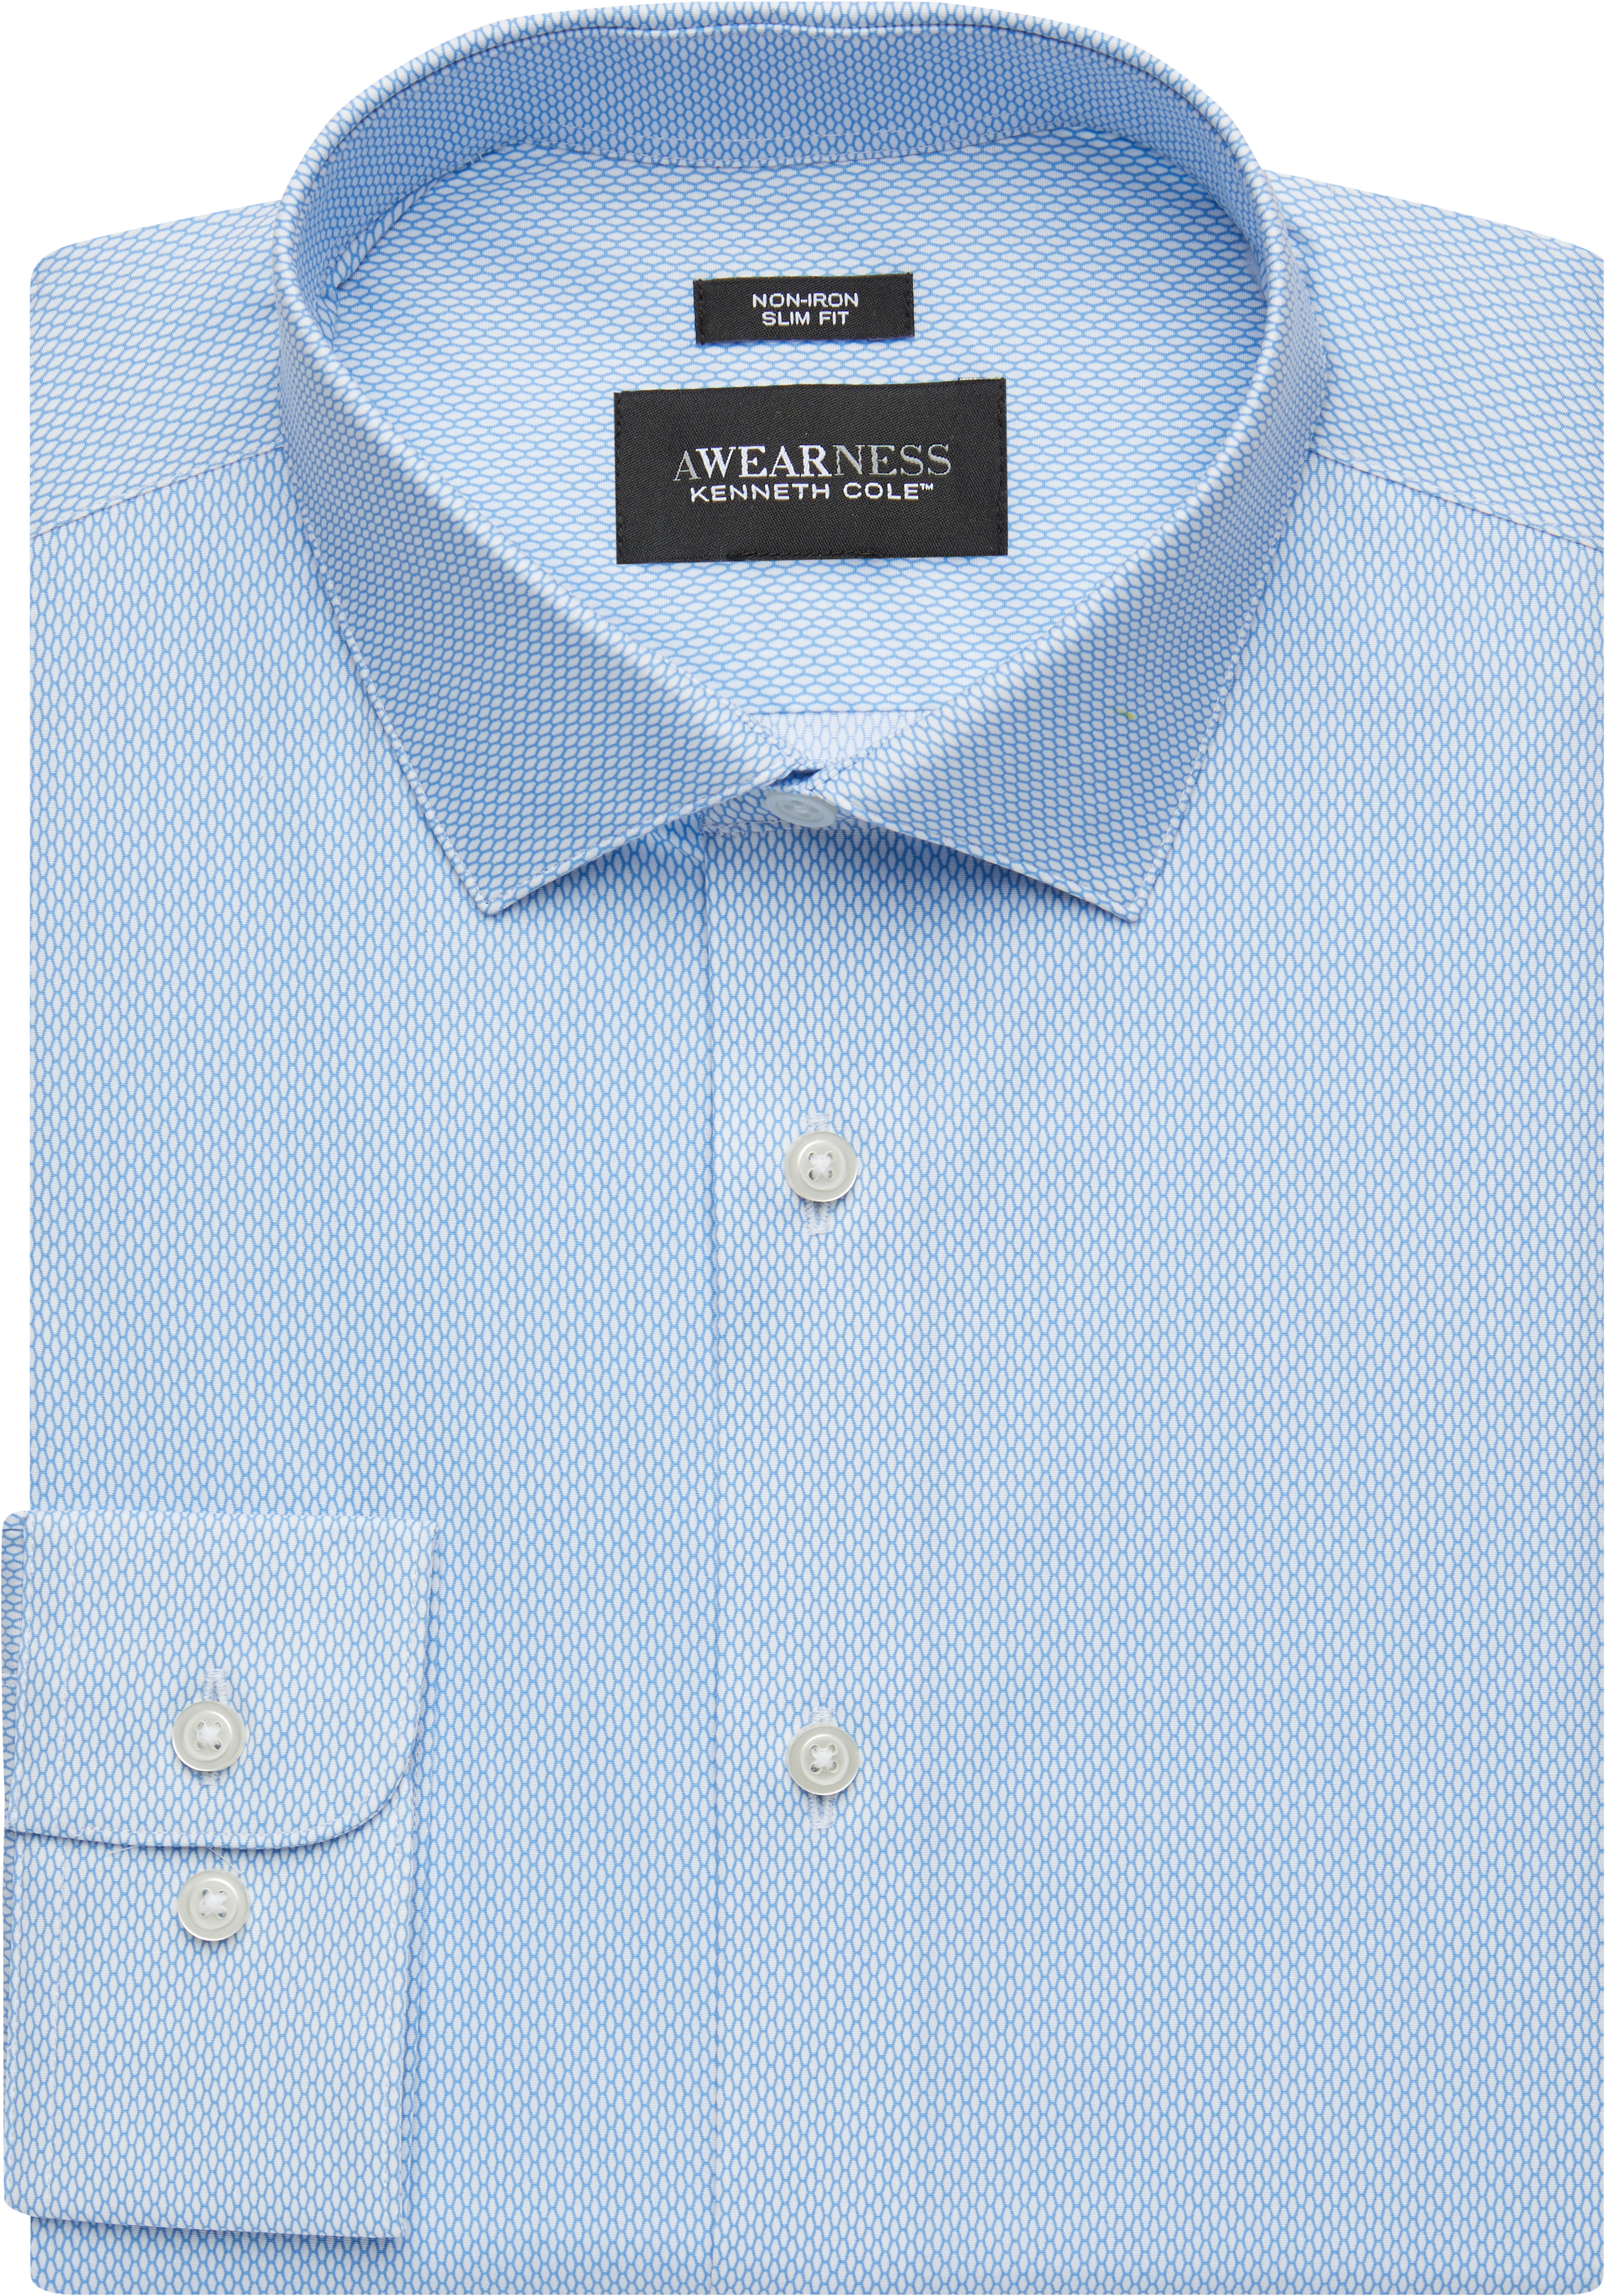 Pronto Uomo Blue Print Slim Fit Dress Shirt - Men's Shirts | Men's ...